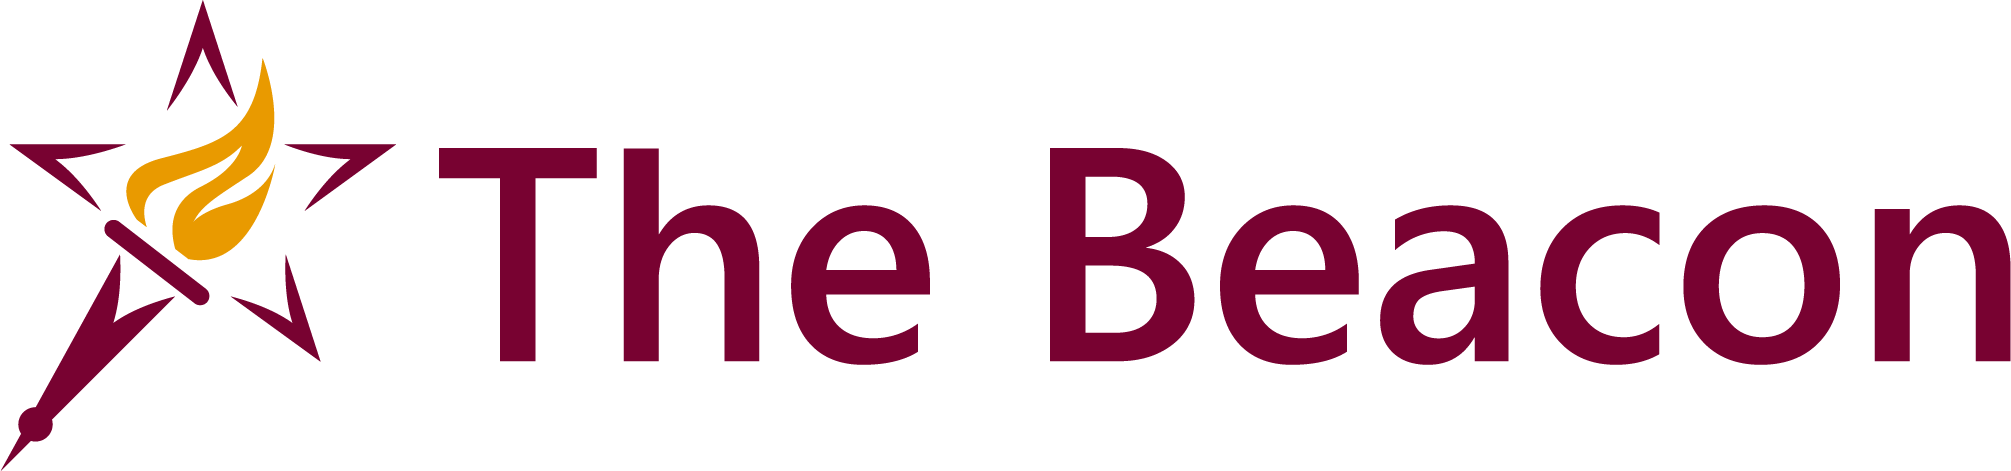 The Beacon School's logo